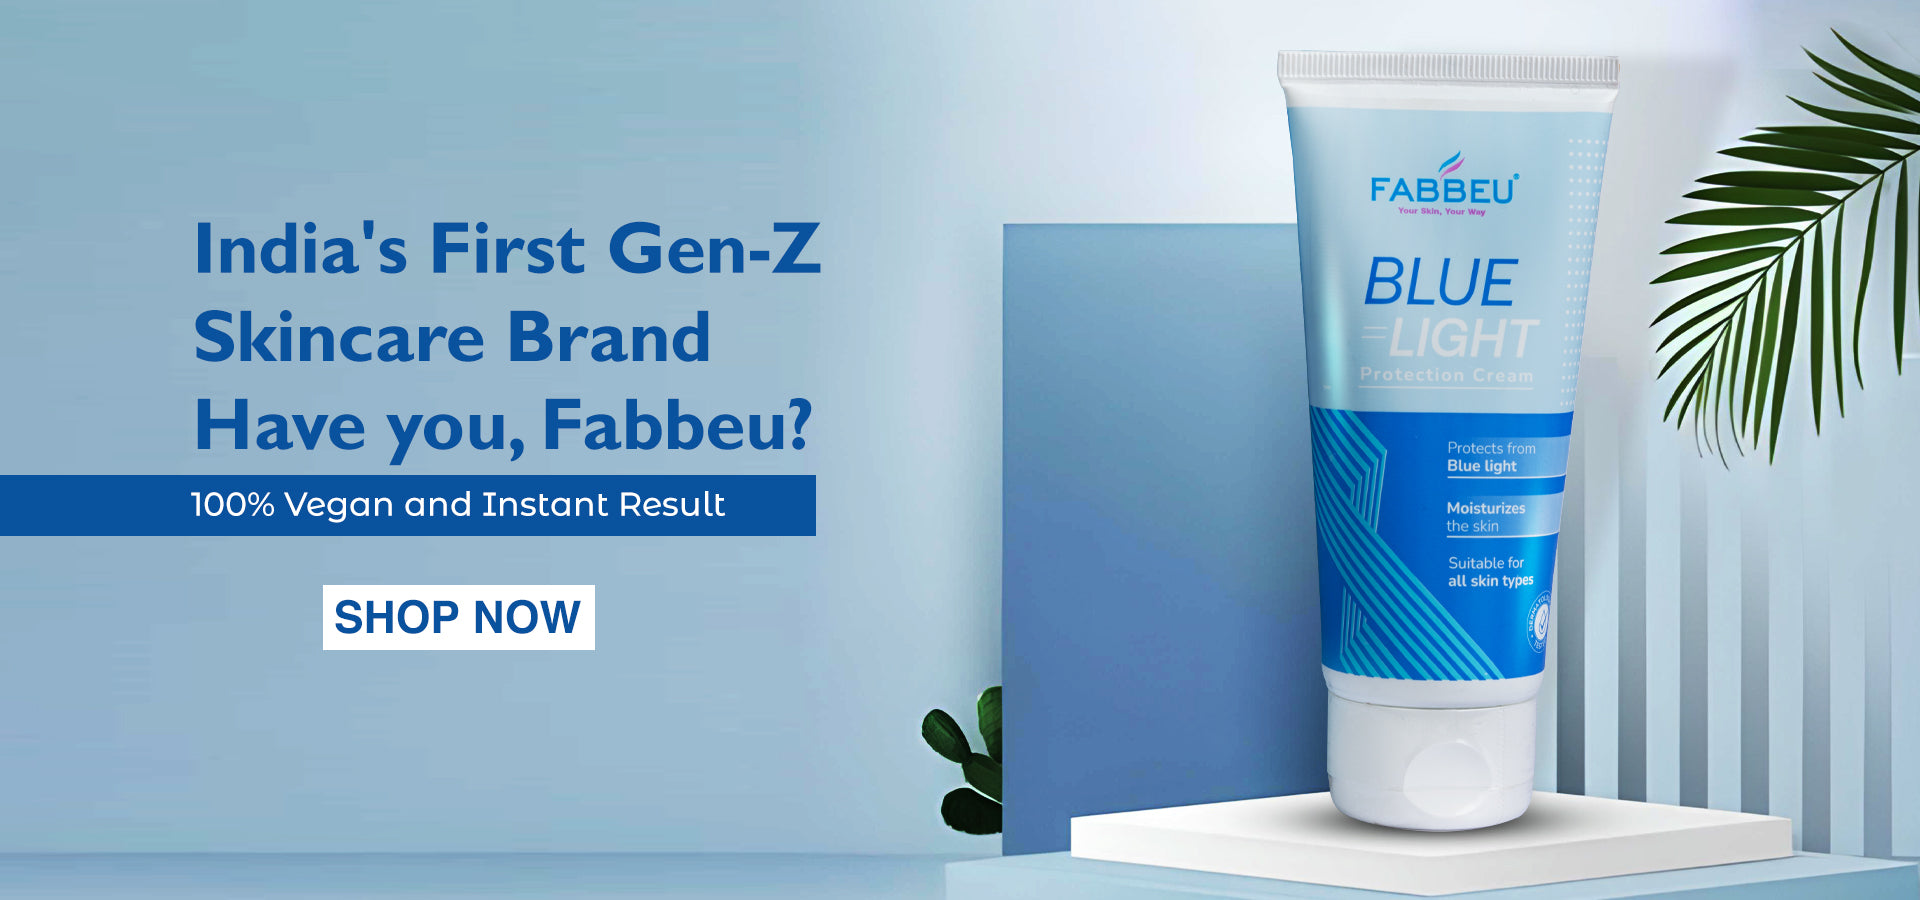 fabbeu_bluelight Face cream